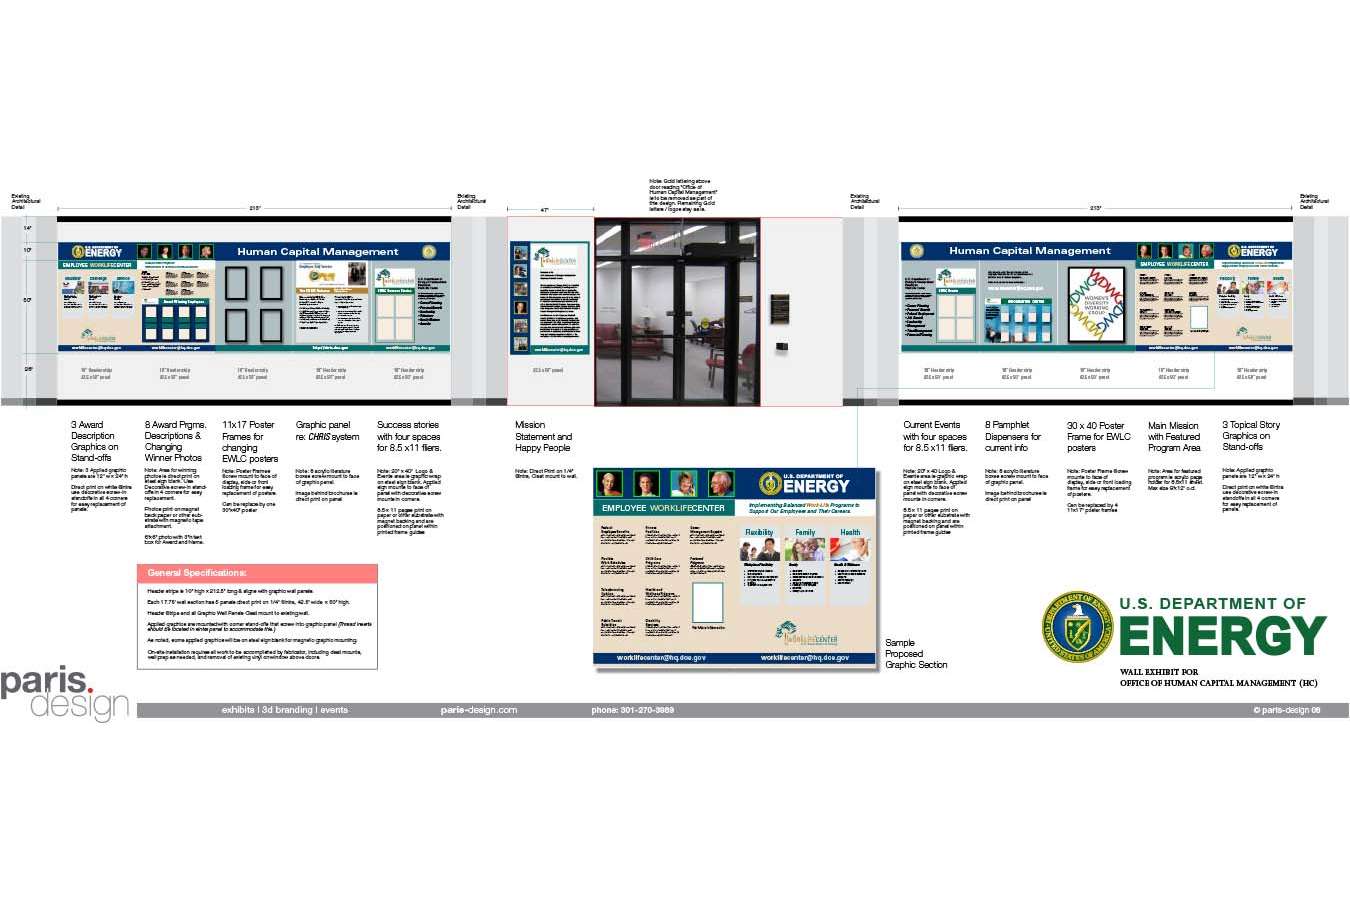 Display Grfx 2 : Department of Energy Corridor Display Concept Design